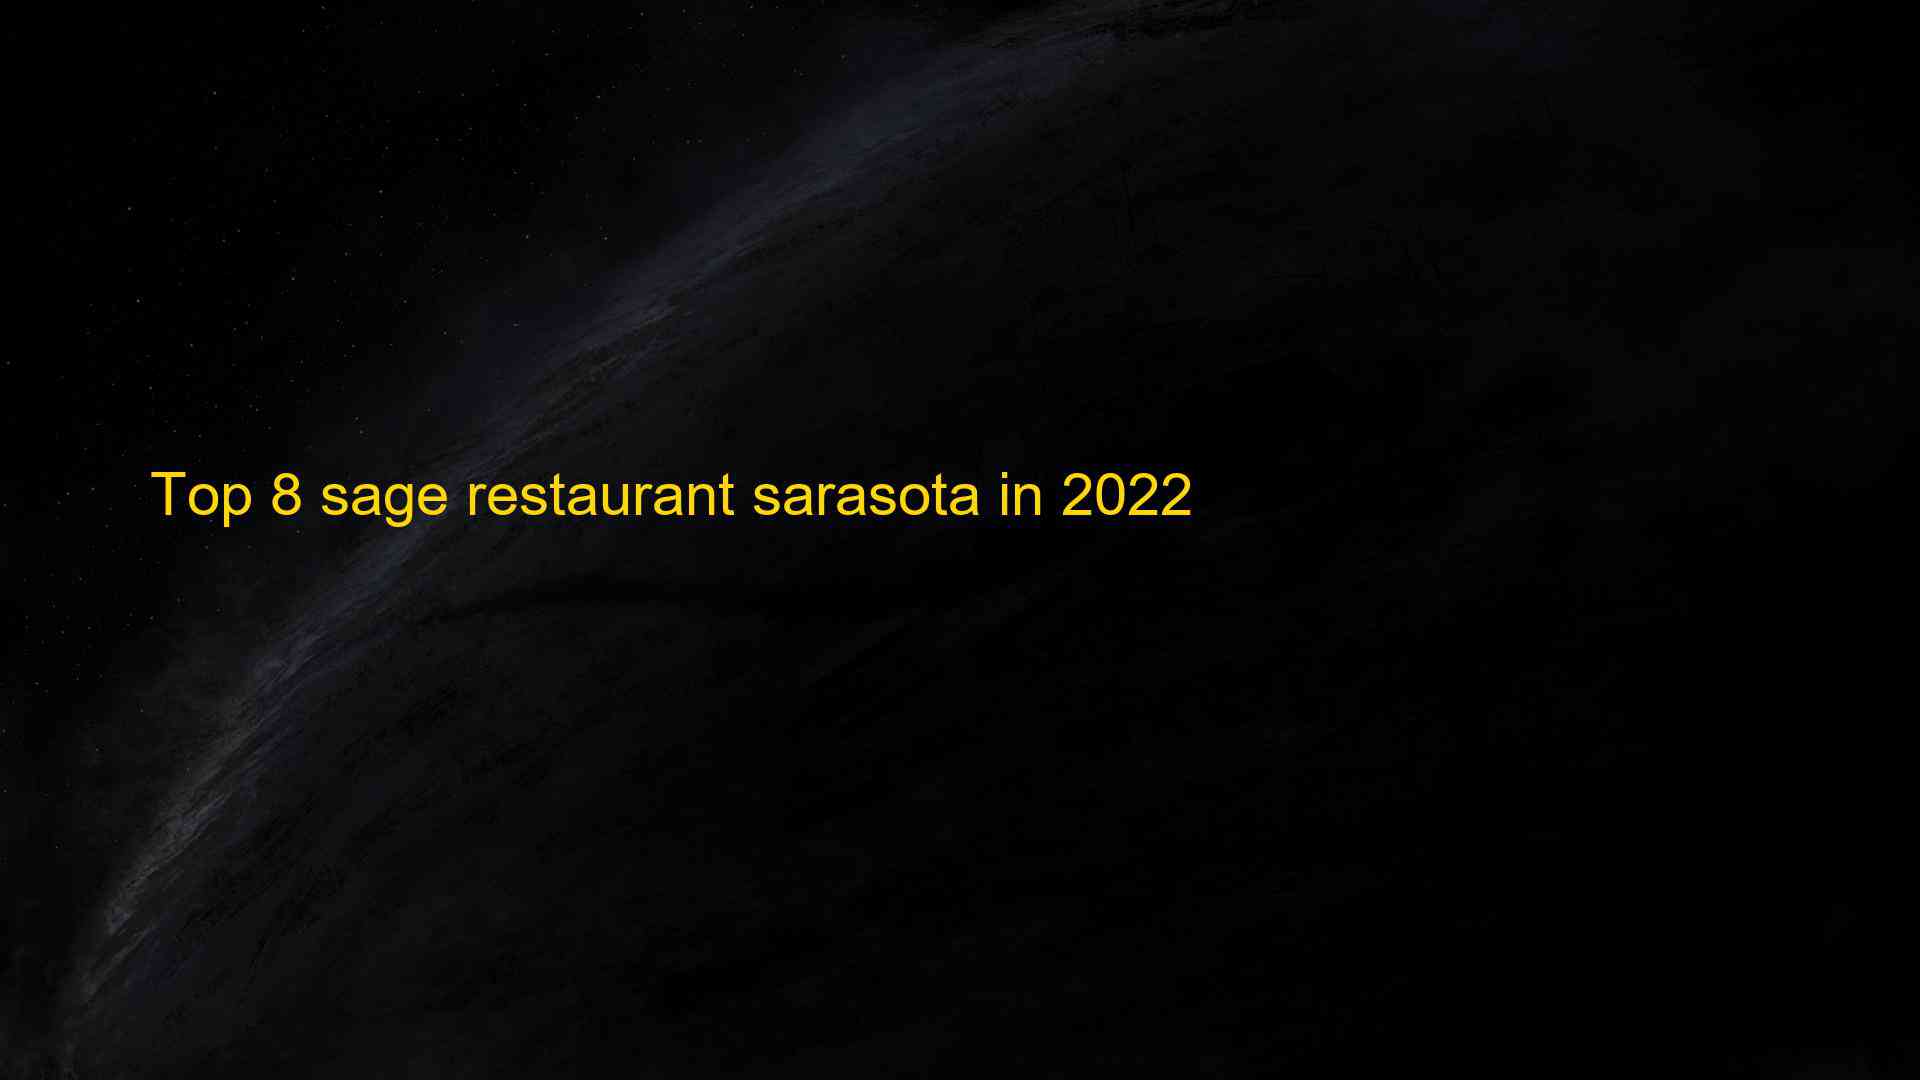 Top 8 sage restaurant sarasota in 2022 1663184874